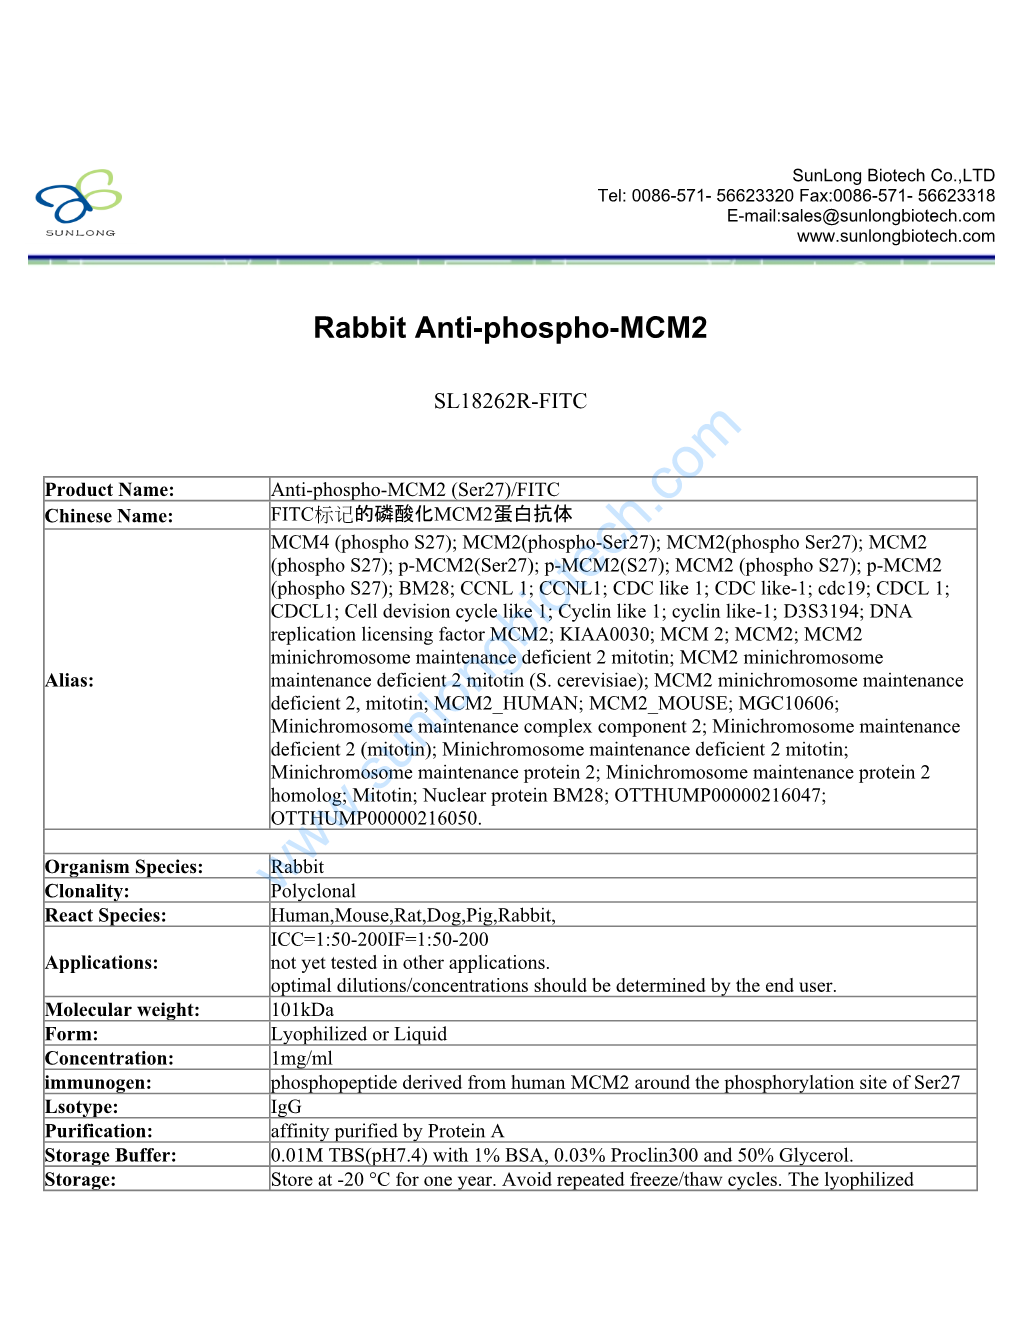 Rabbit Anti-Phospho-MCM2-SL18262R-FITC